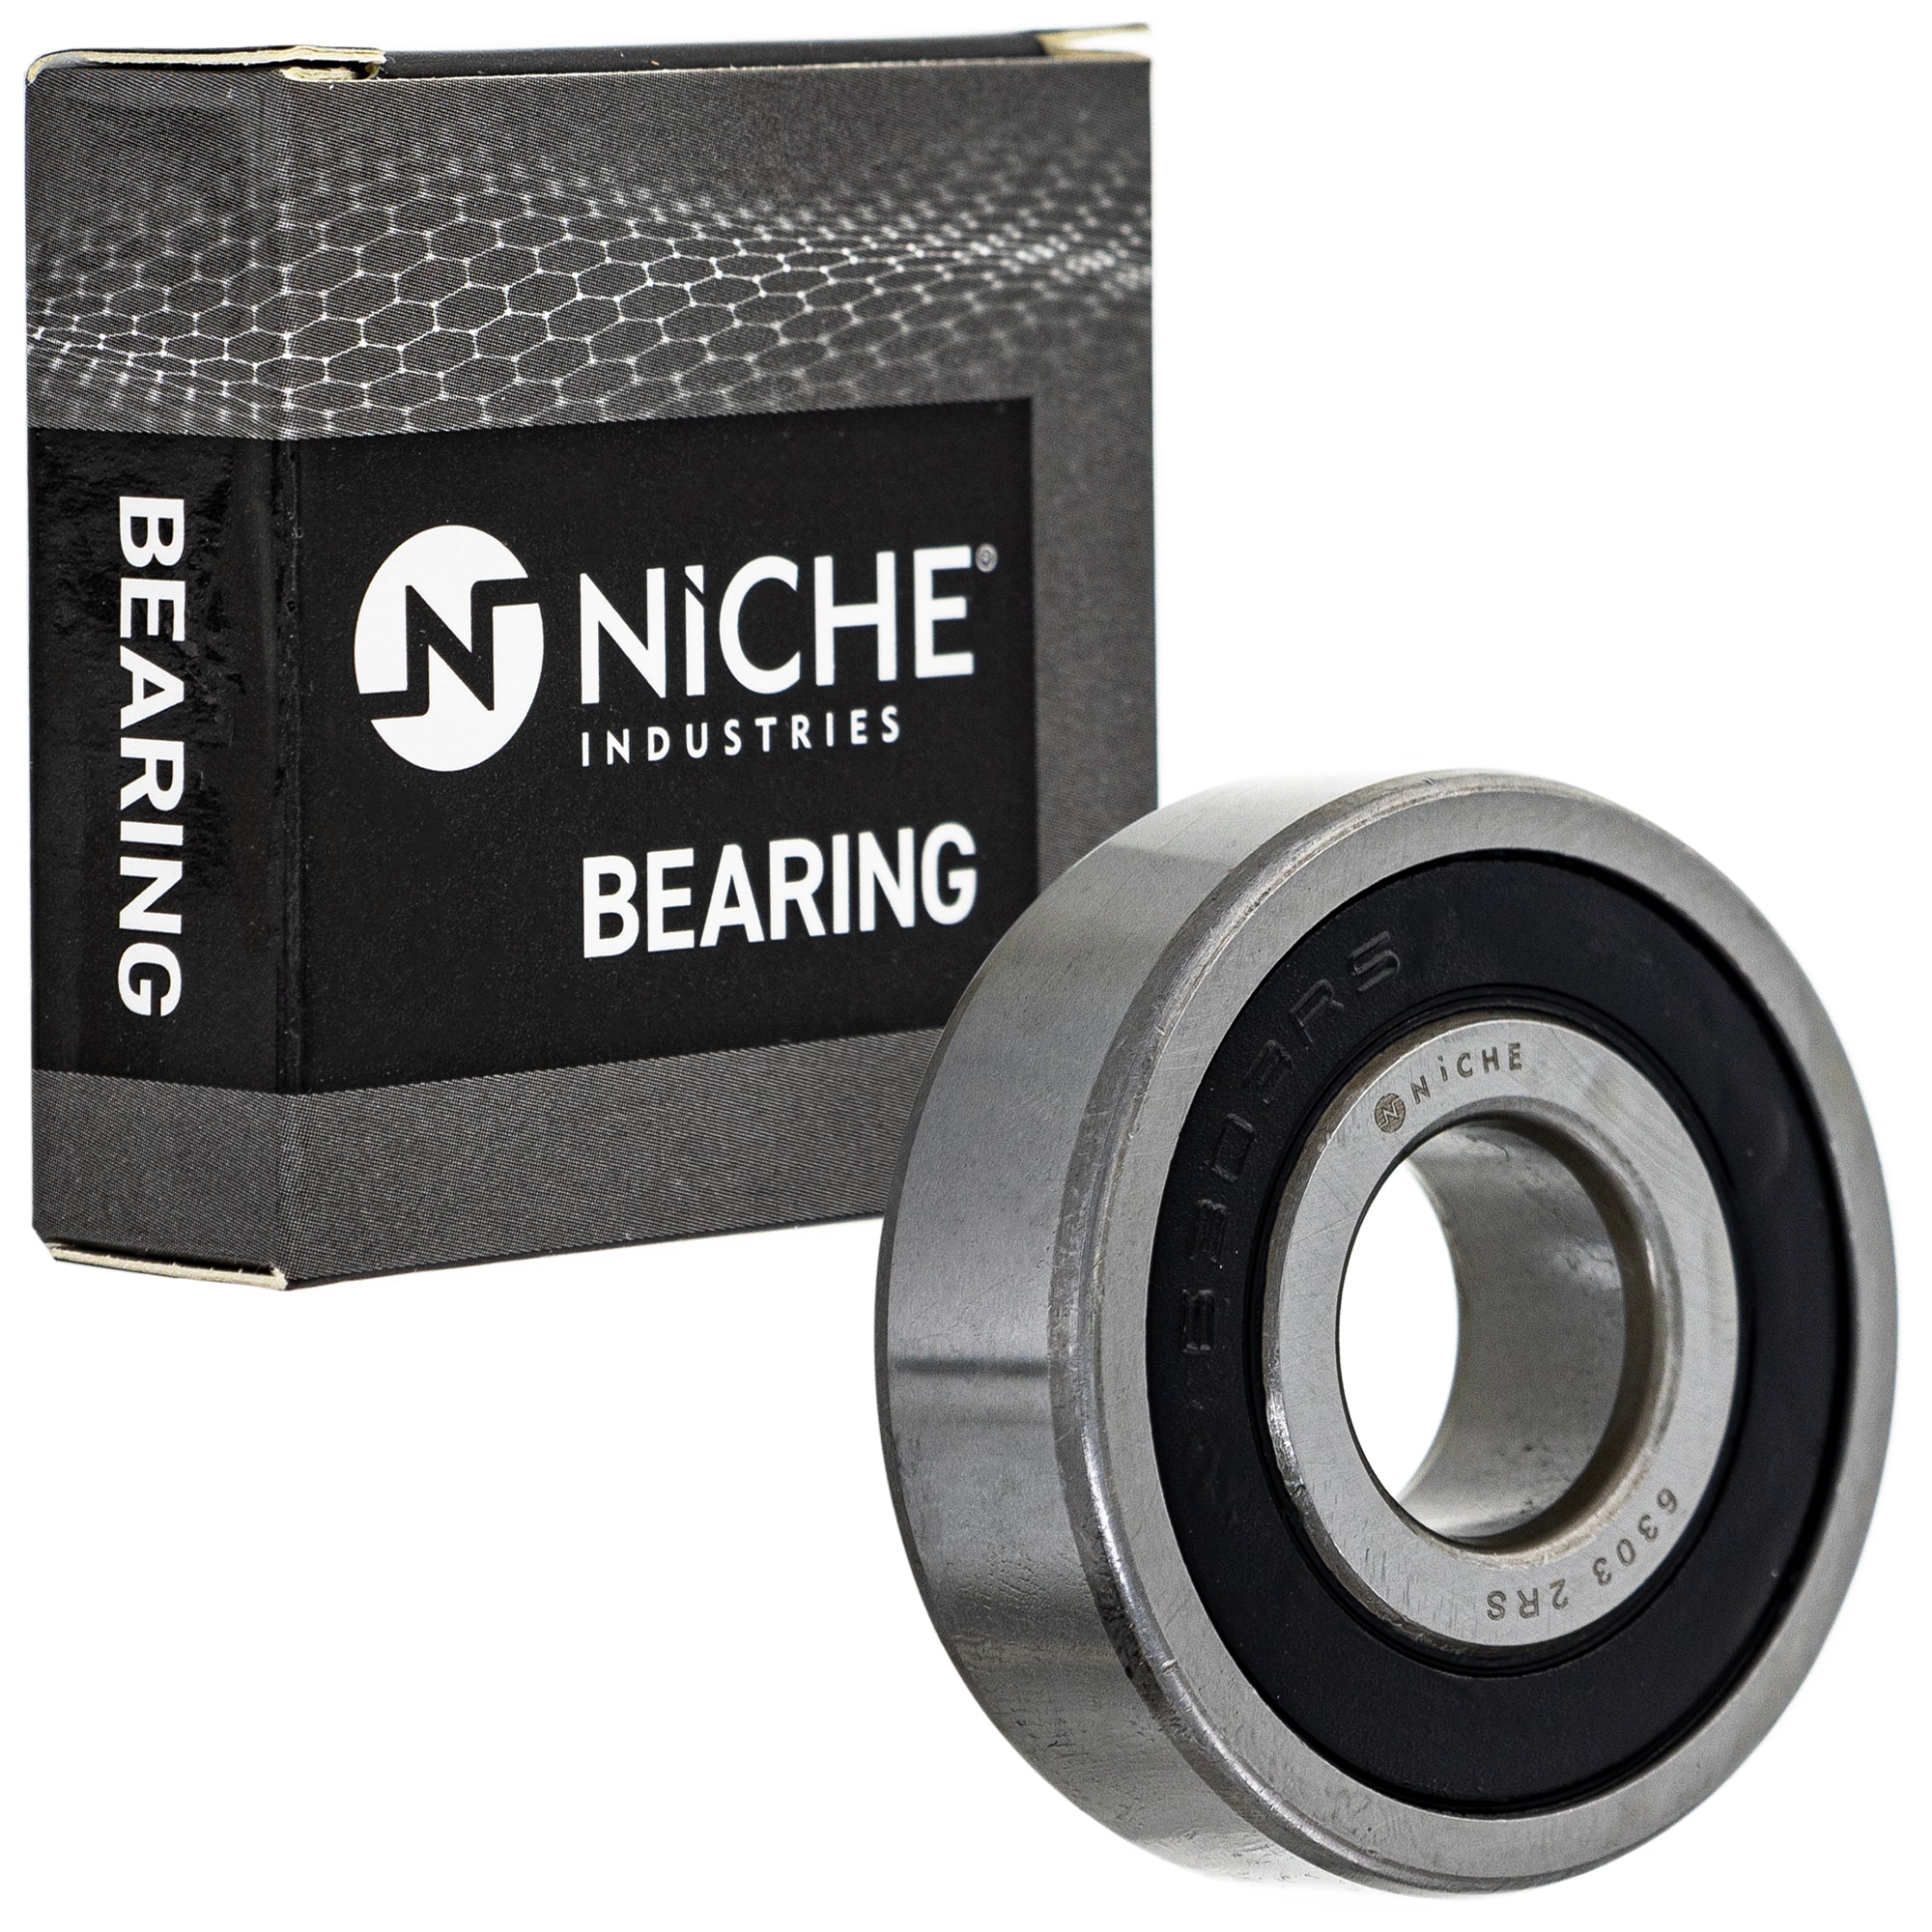 NICHE 519-CBB2236R Bearing 10-Pack for zOTHER V45 V30 Tourist Silver